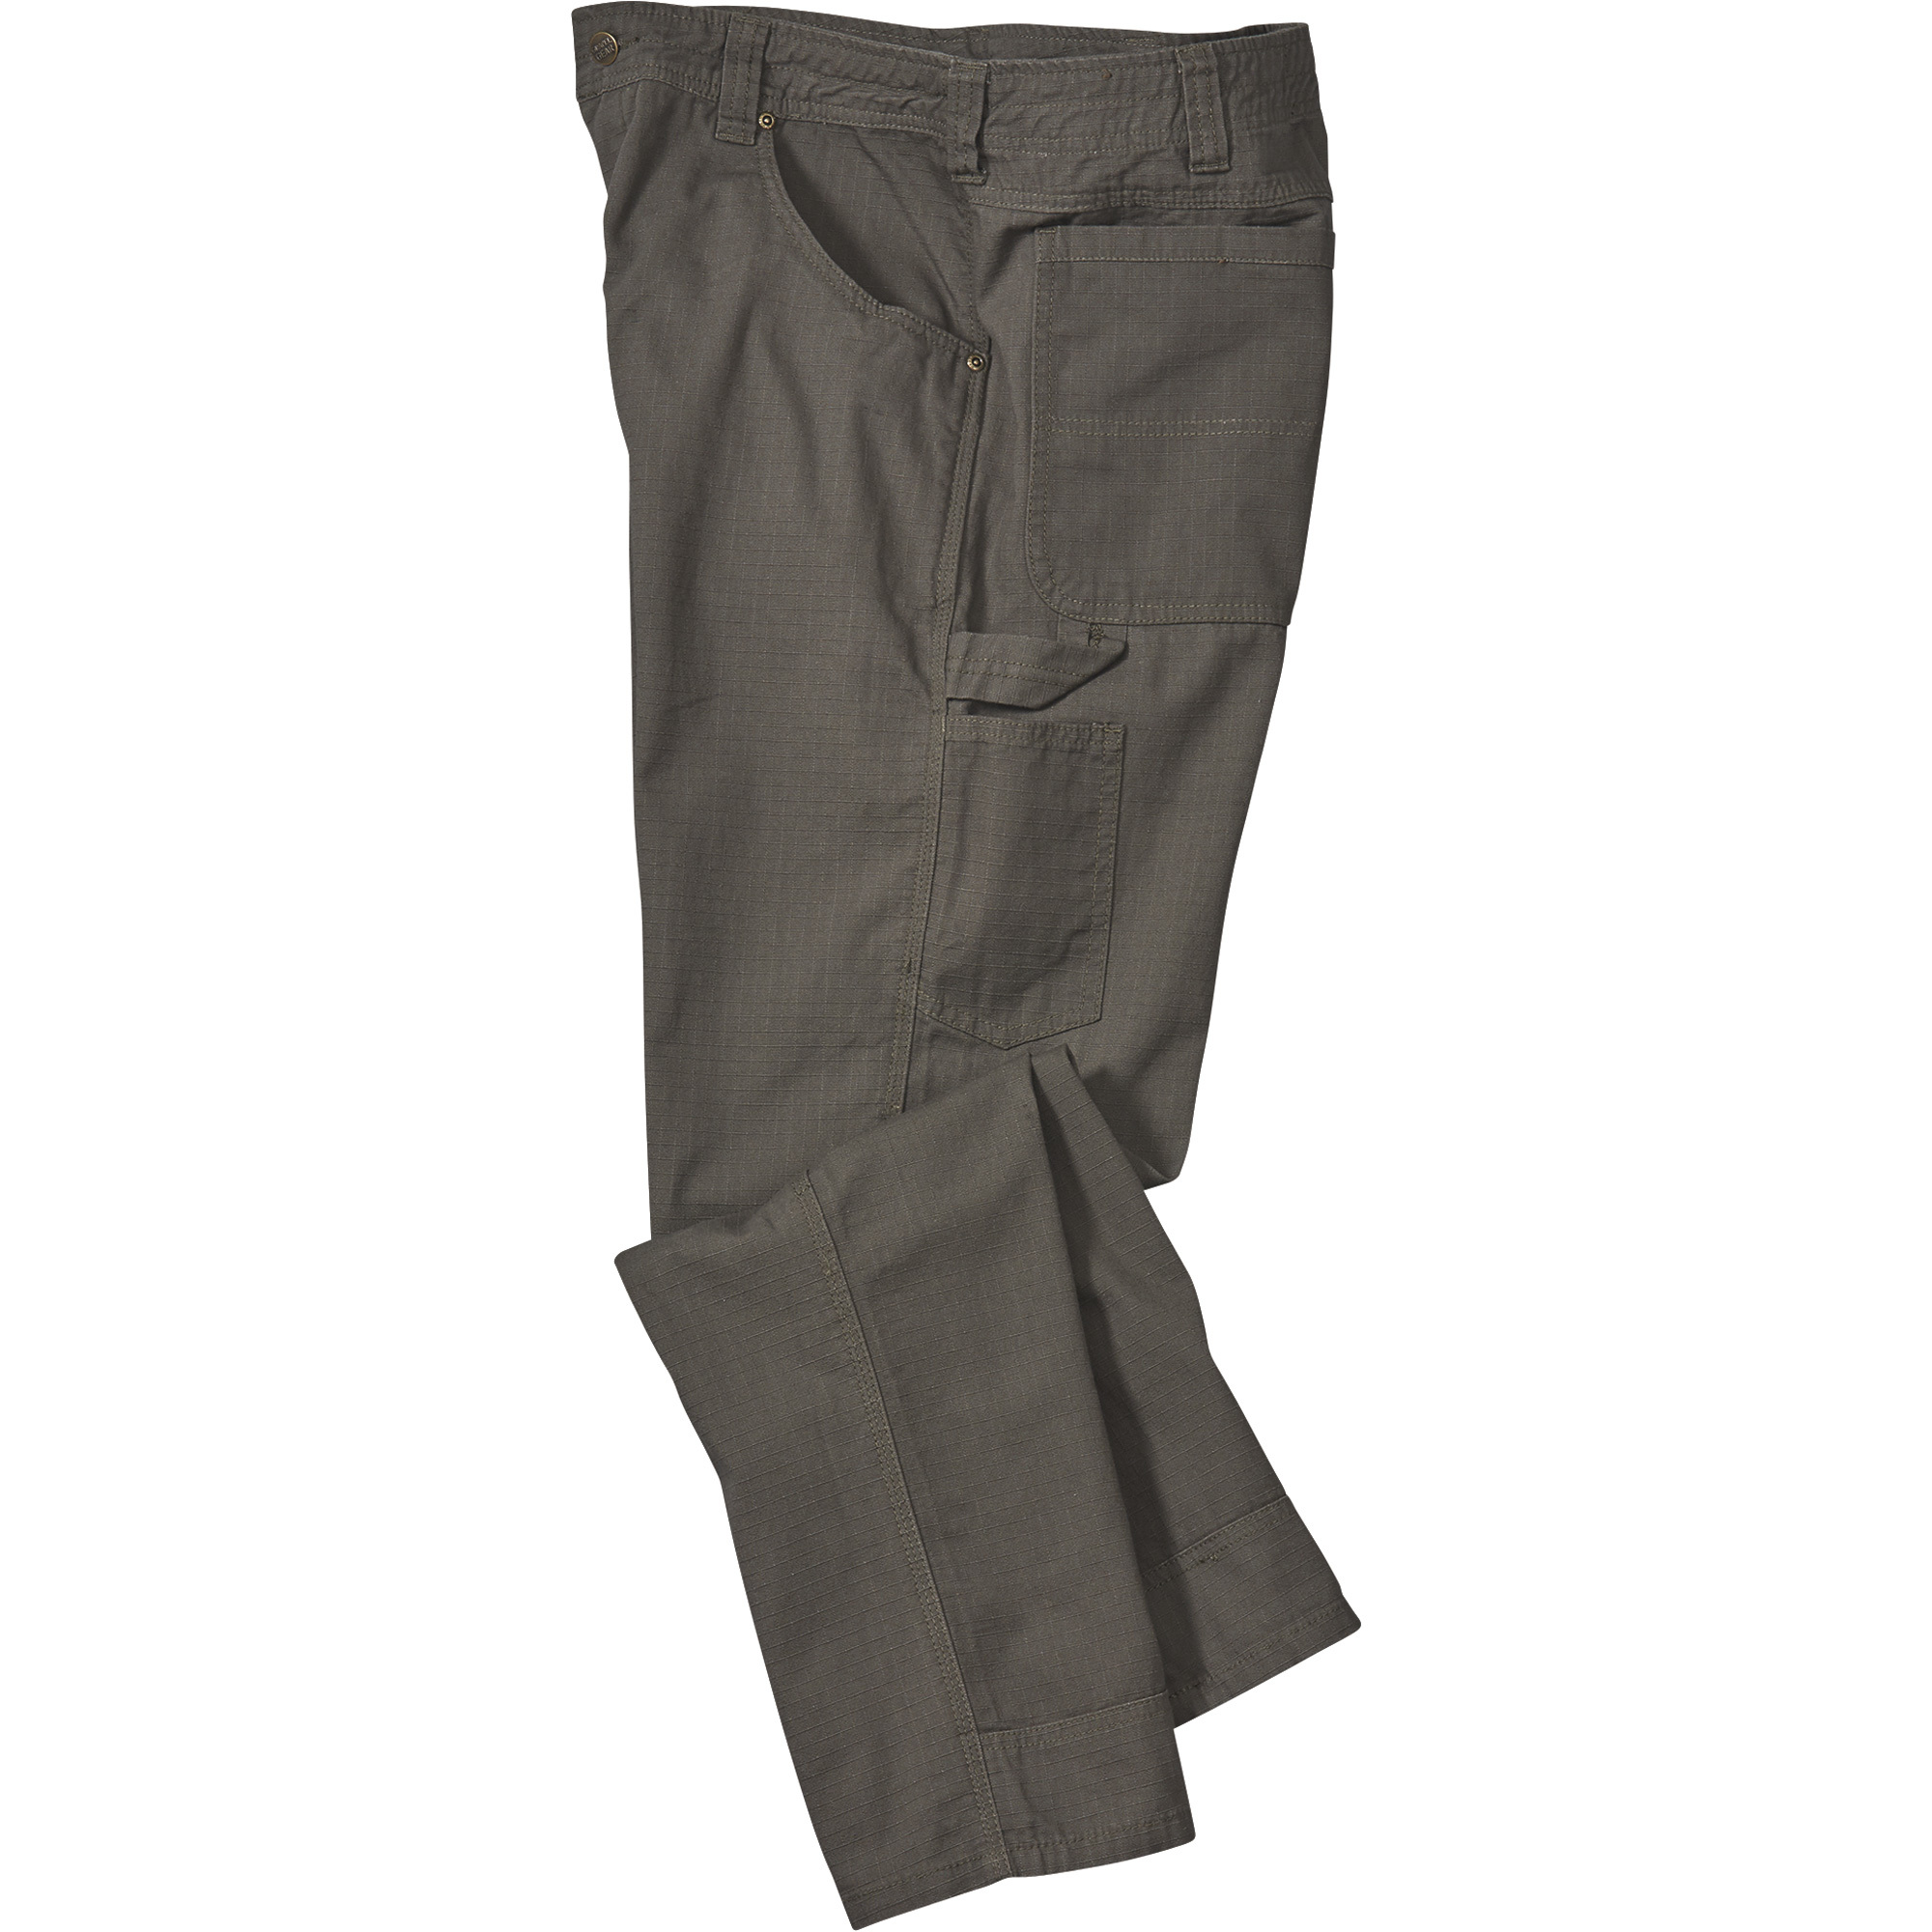 Gravel Gear Men's Cotton Ripstop Carpenter Pants with Teflon Fabric Protector â Moss, 46Inch Waist x 30Inch Inseam